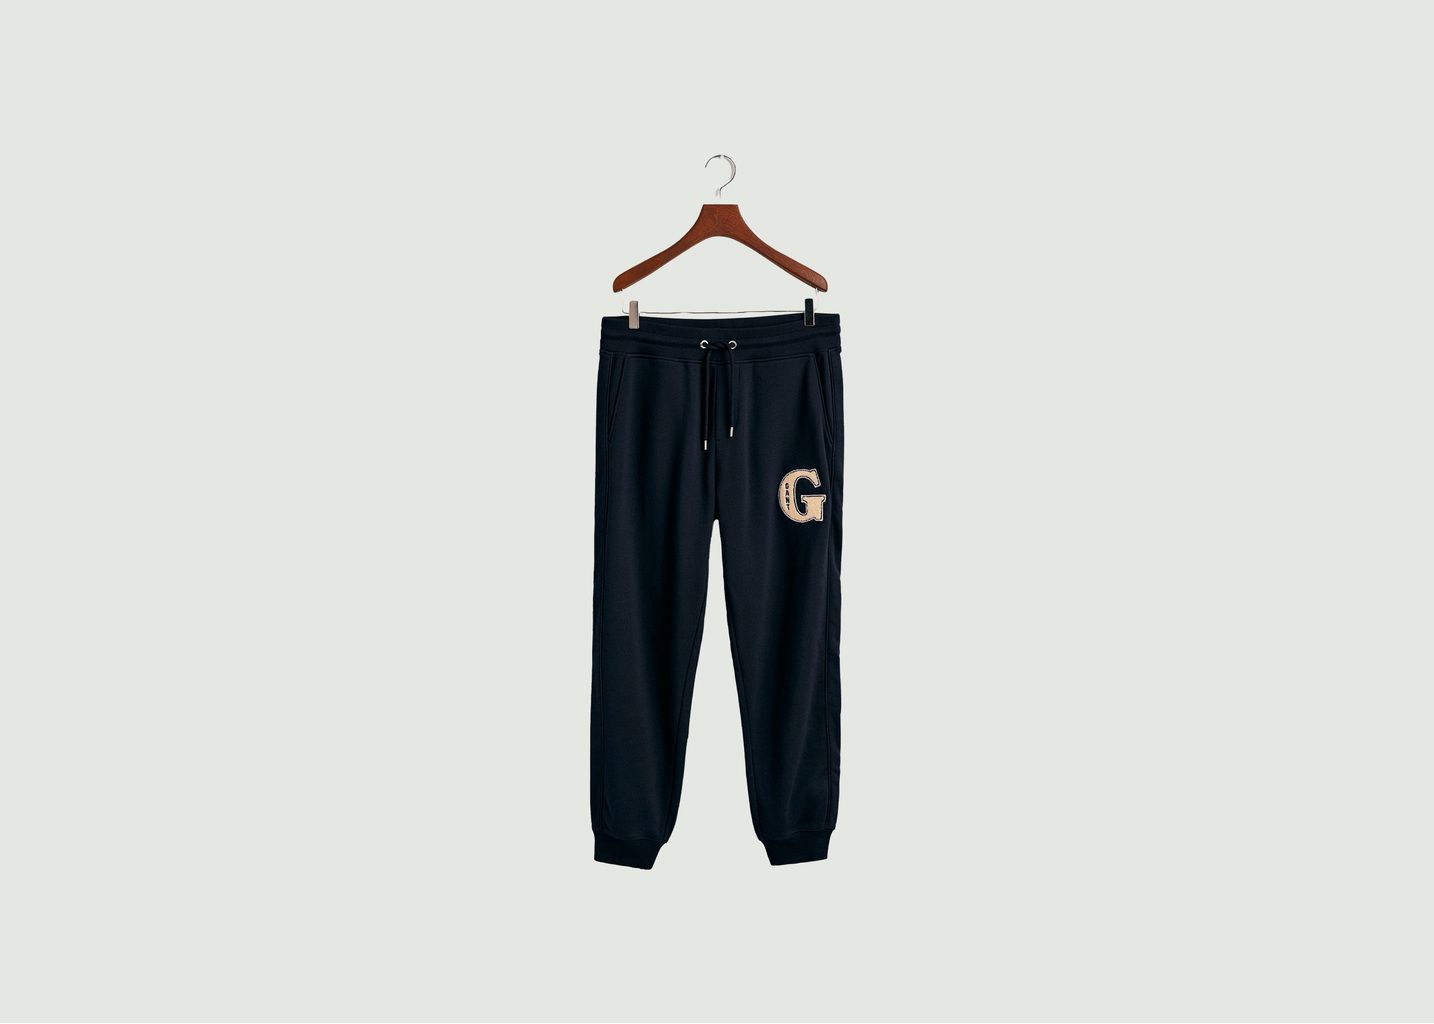 Pantalon Graphic G - Gant